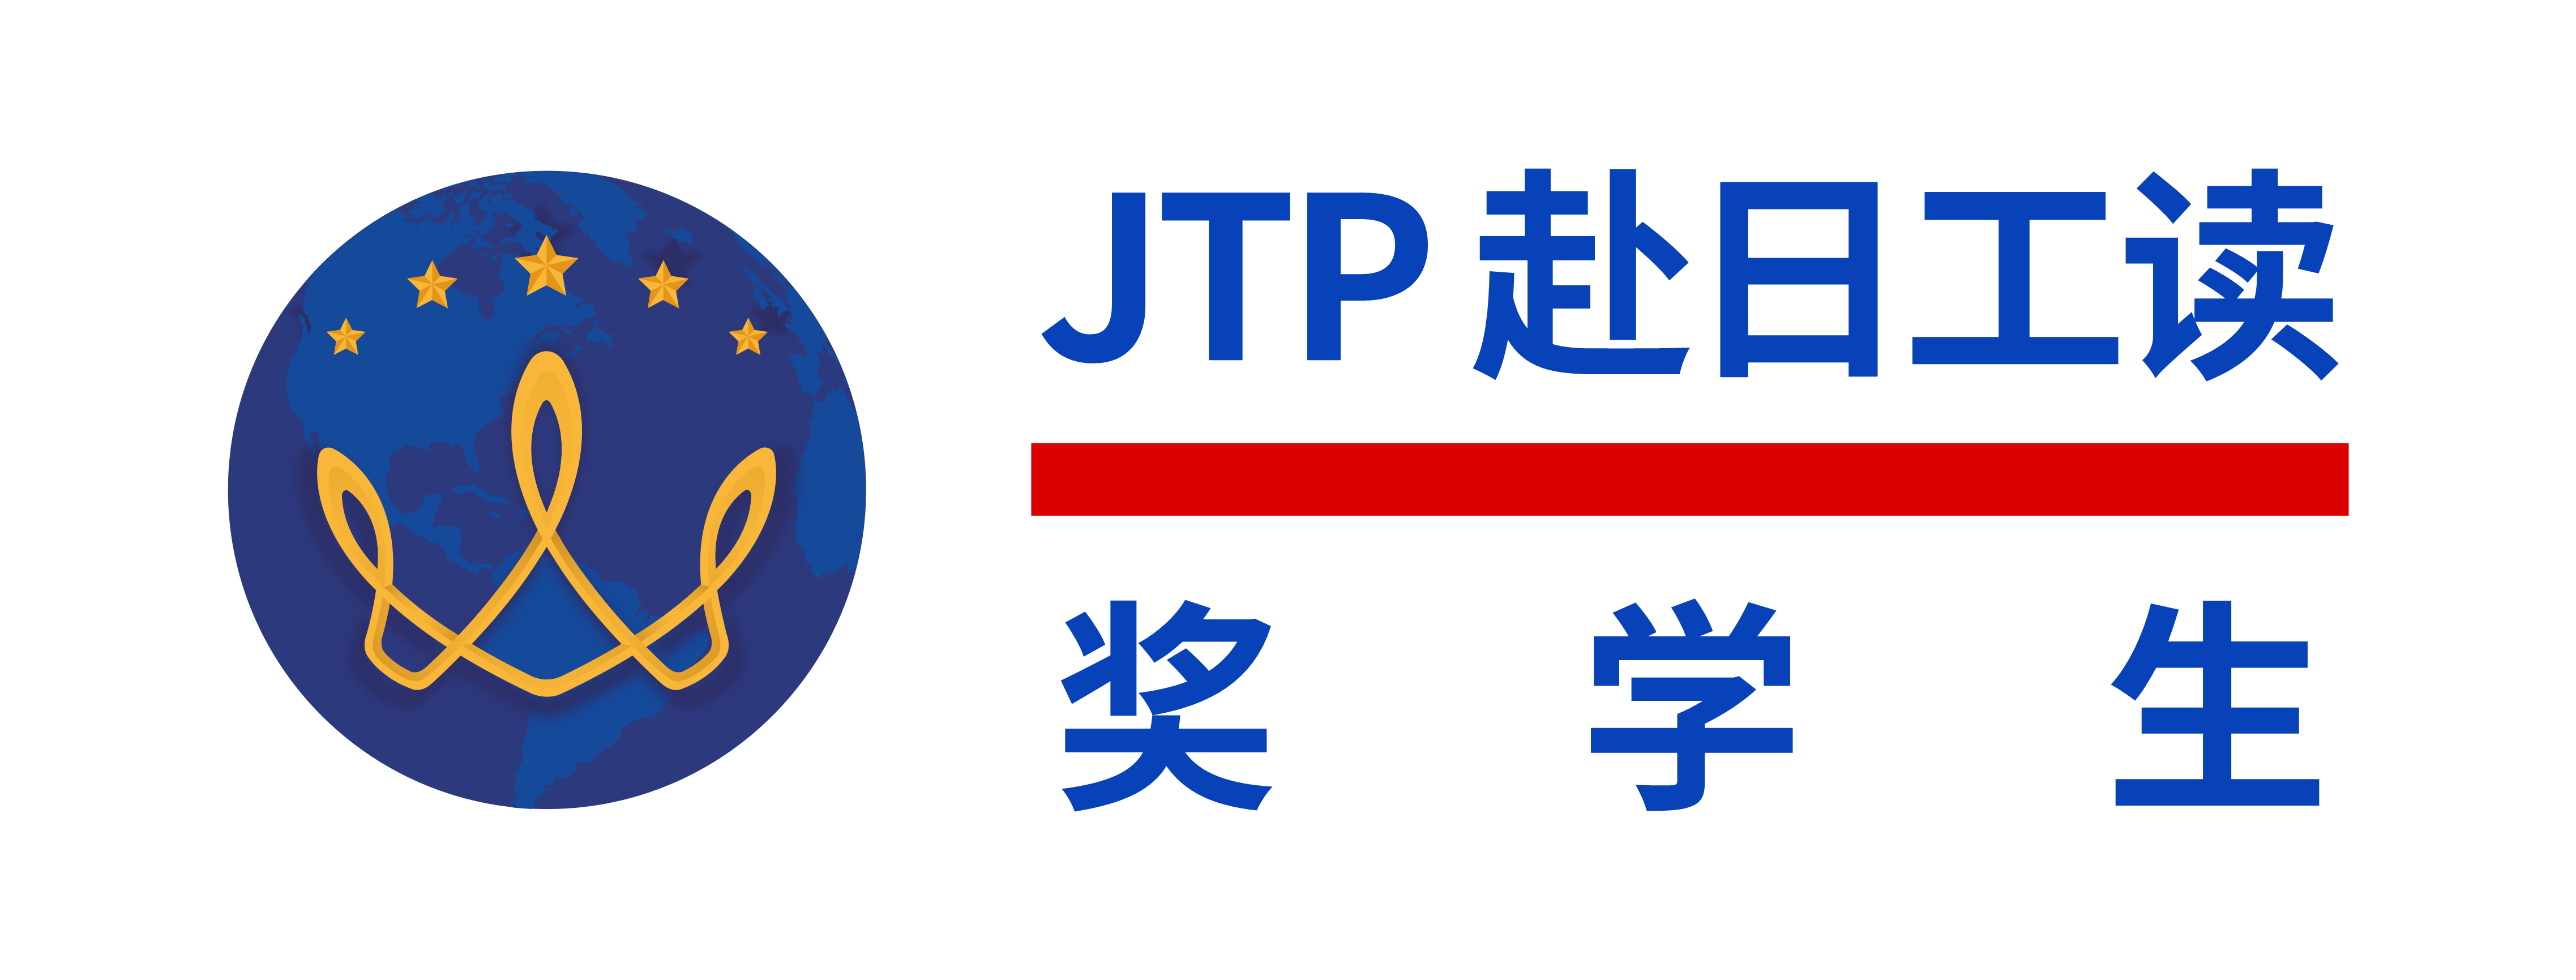 JTP赴日工读奖学生